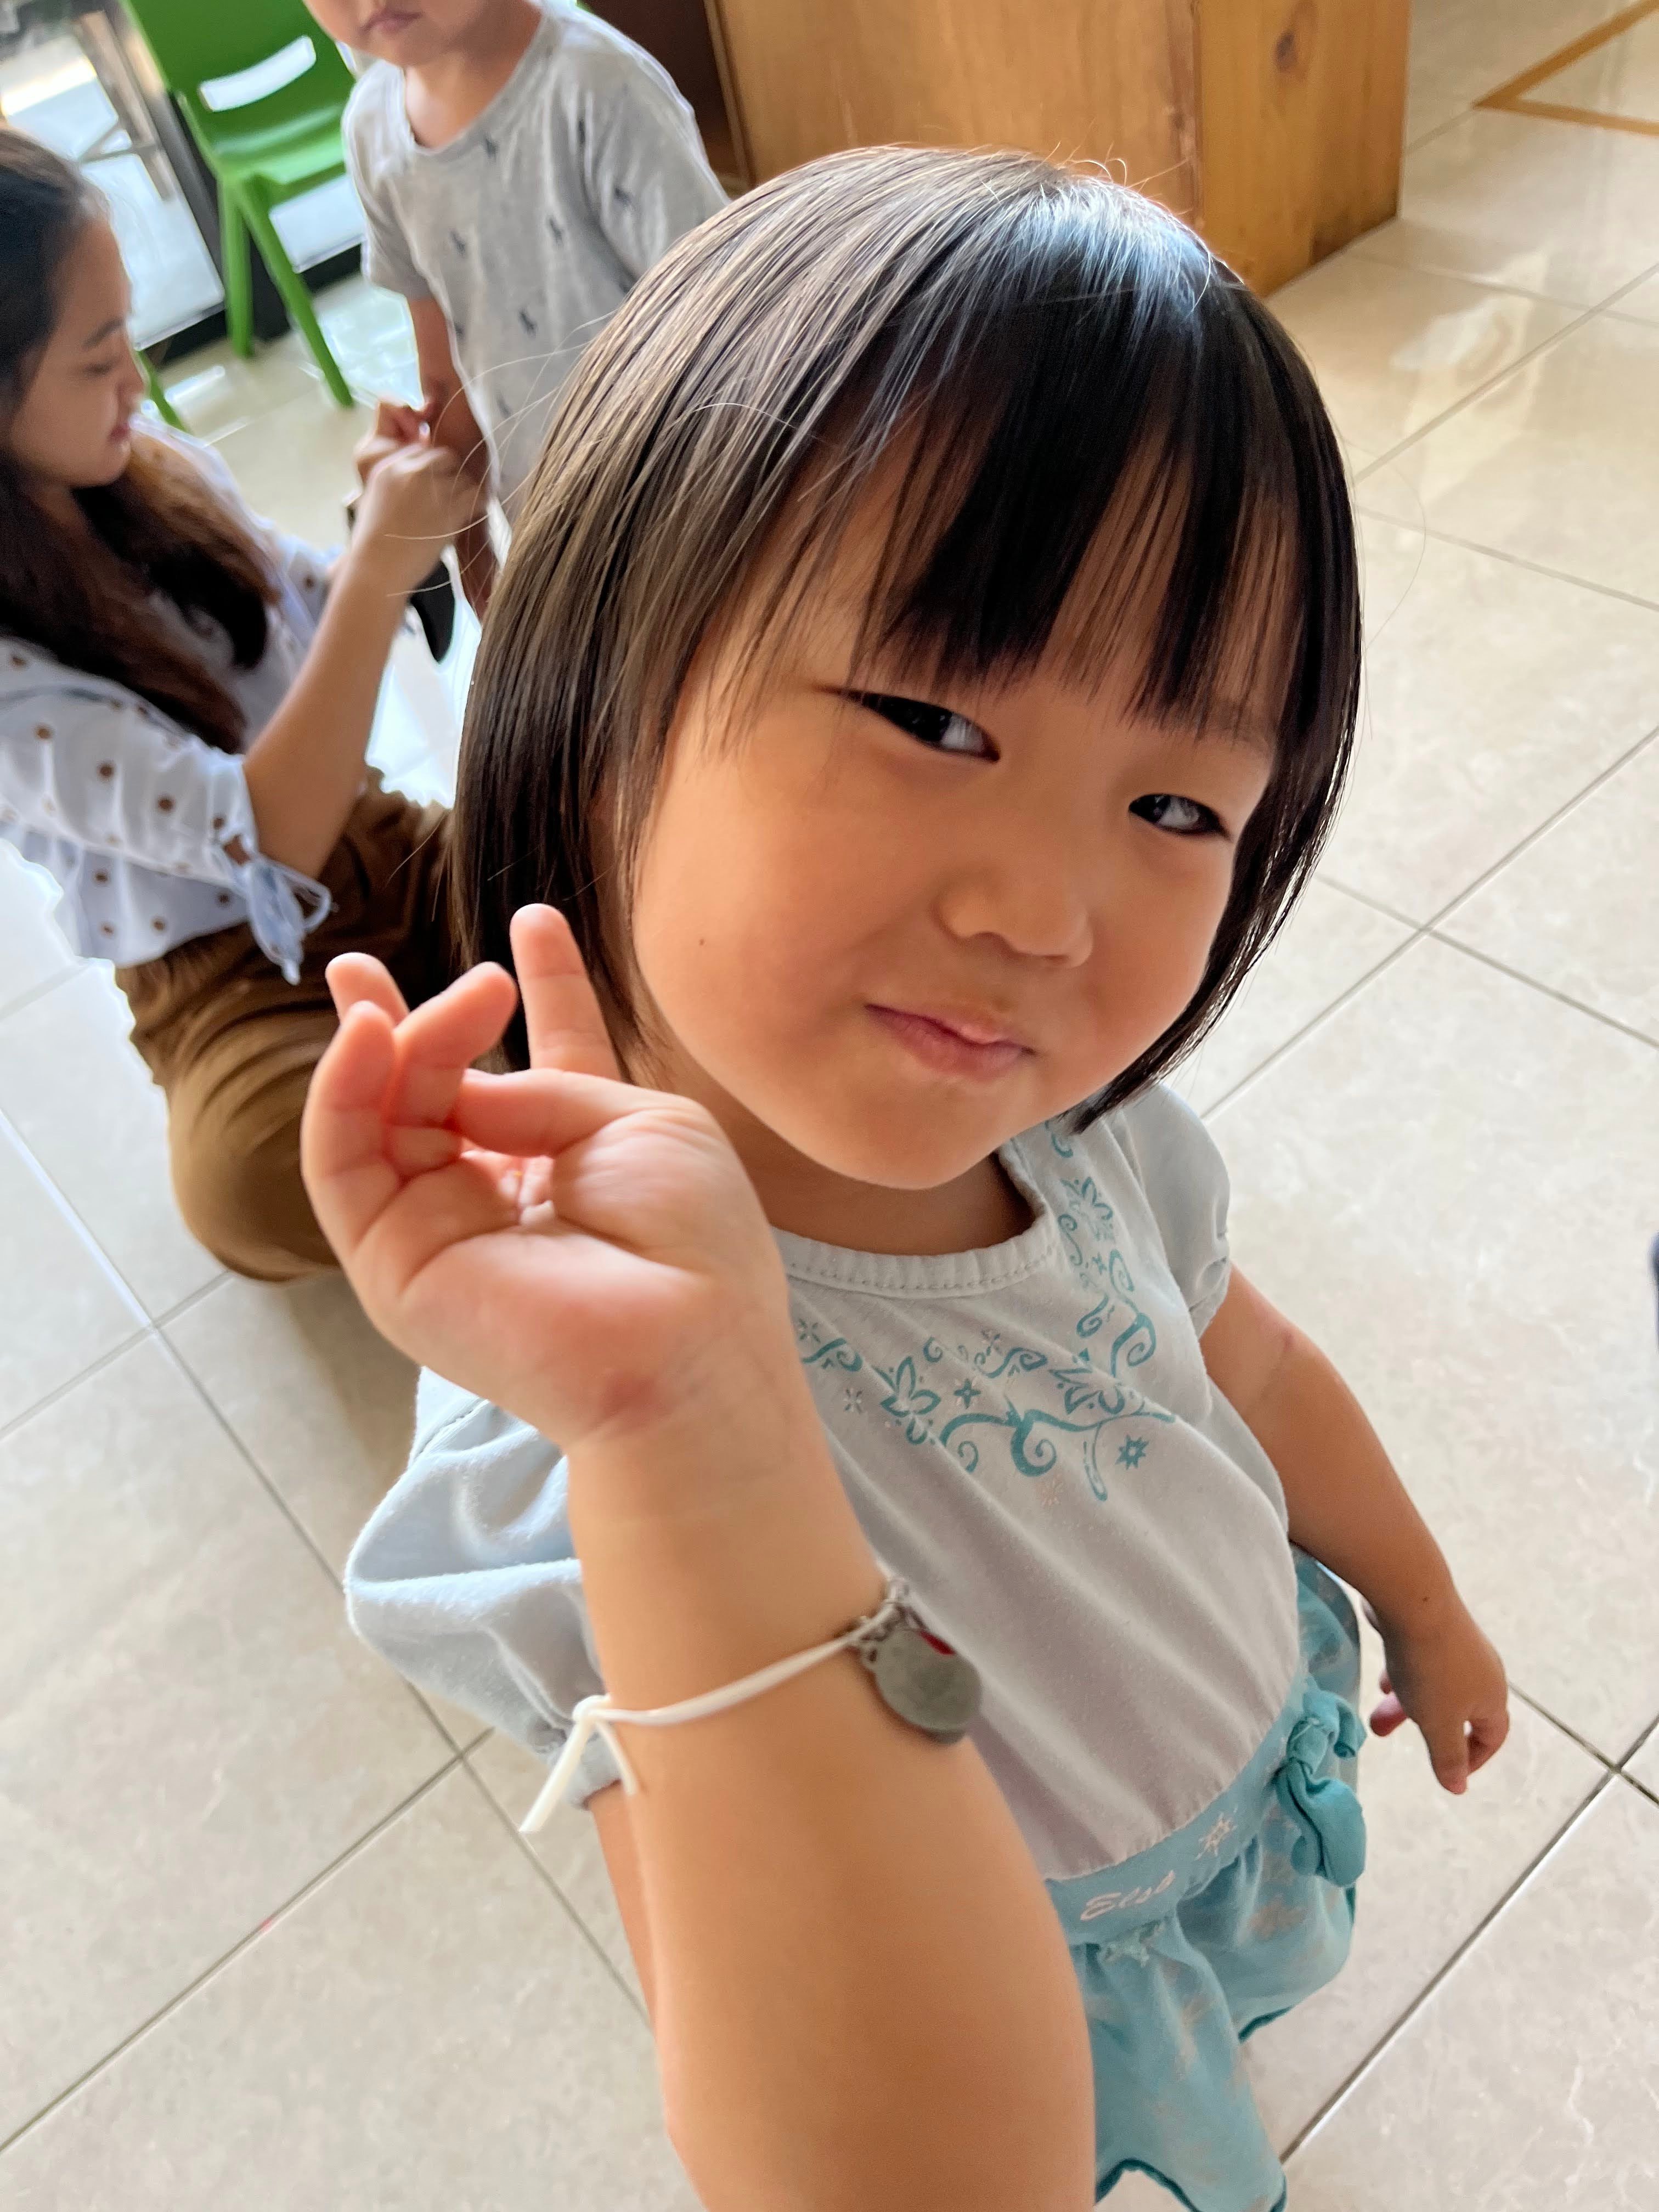 little indonesian girl showing off her gospel bracelet to the camera